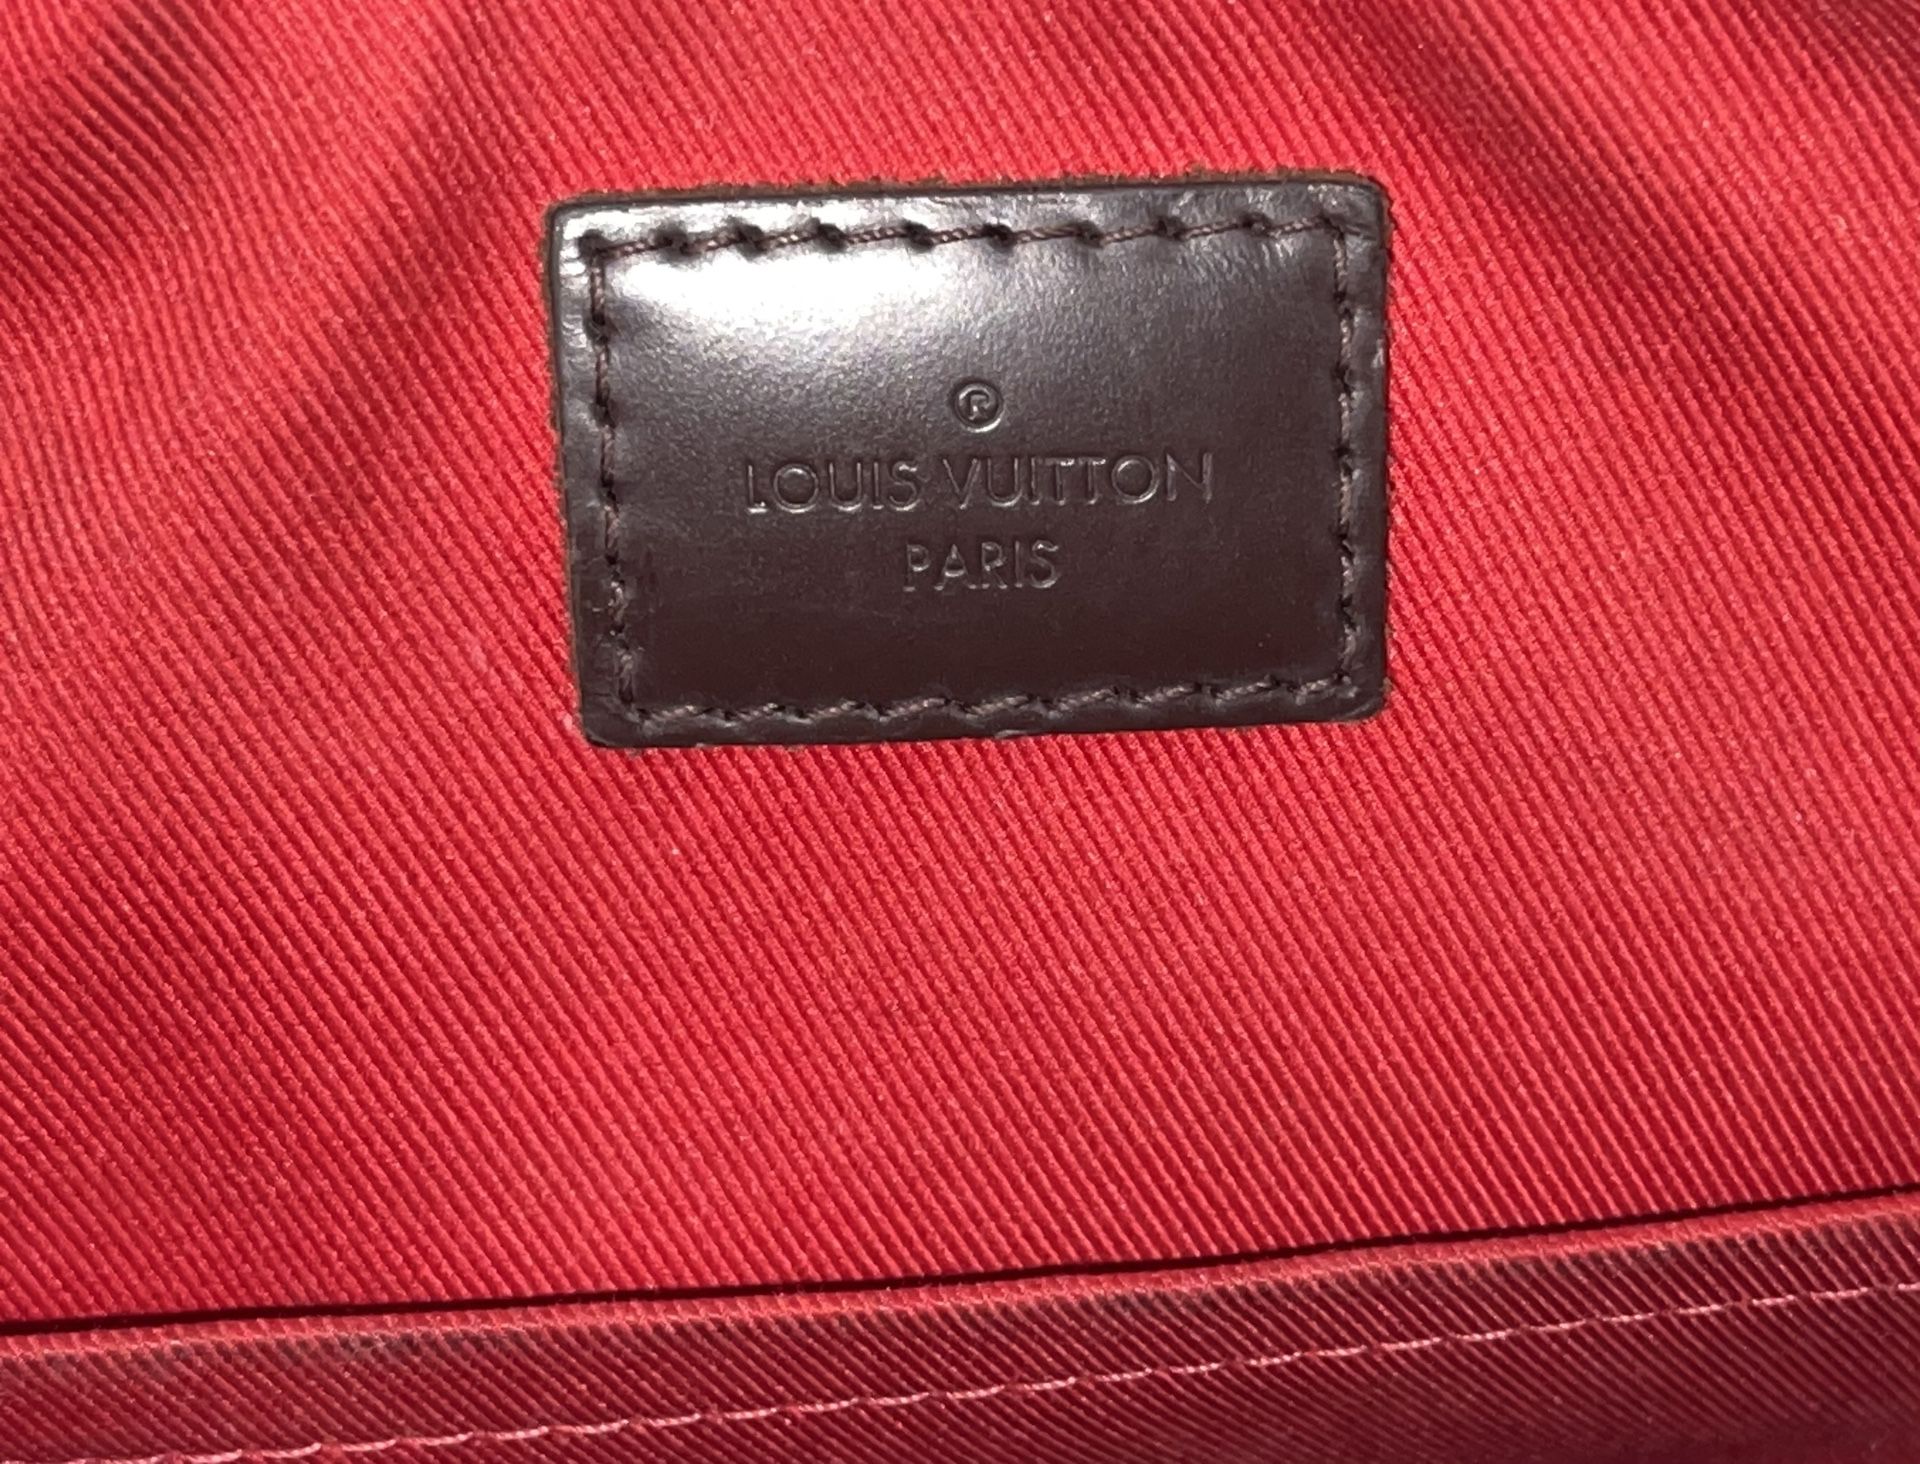 Louis Vuitton New Damier Ebene South Bank Besace Bag for Sale in Honolulu,  HI - OfferUp